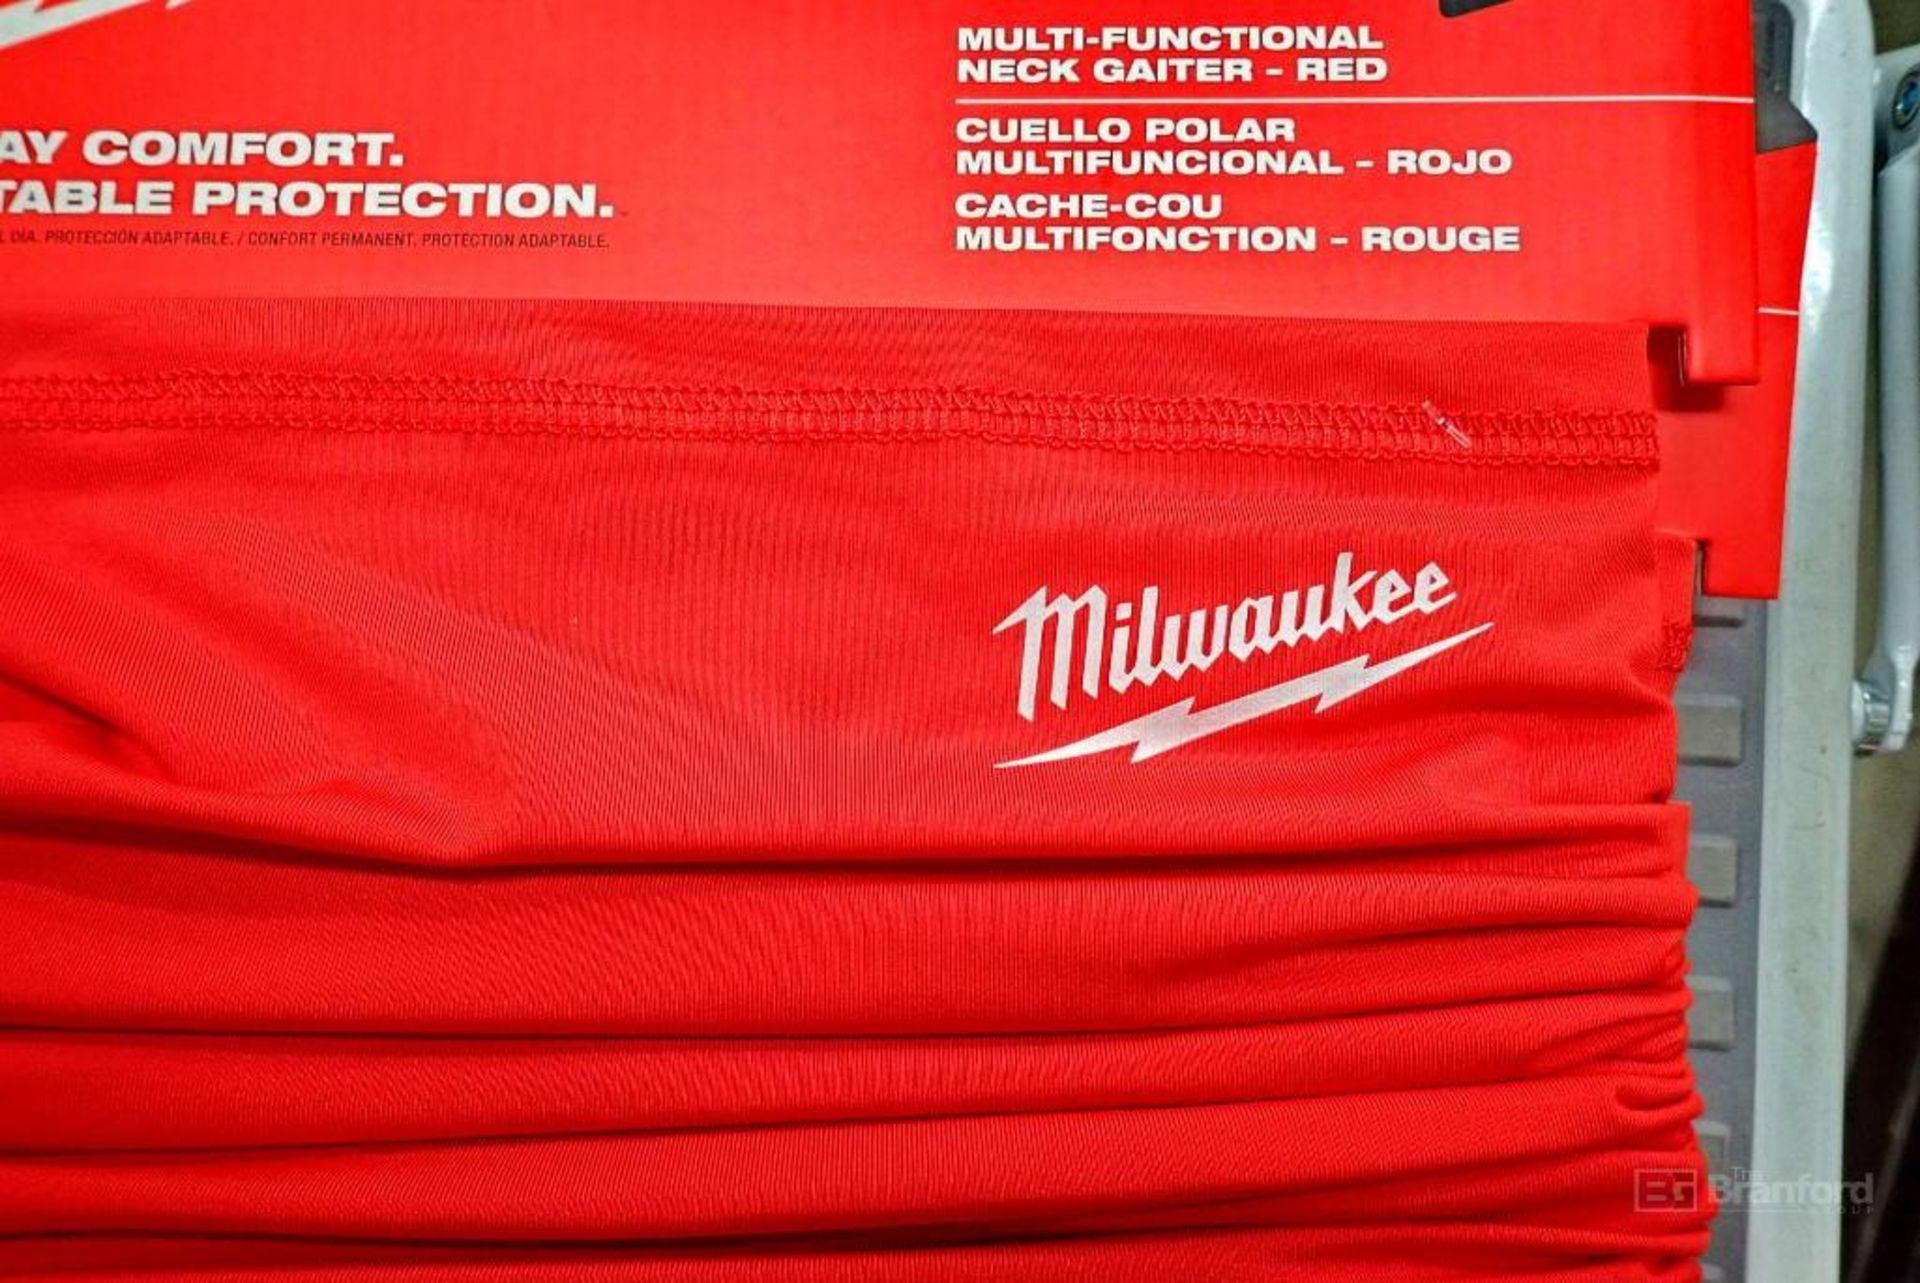 Box Lot of Milwaukee 423G Multi-Functional Neck Gaiters - Image 2 of 3